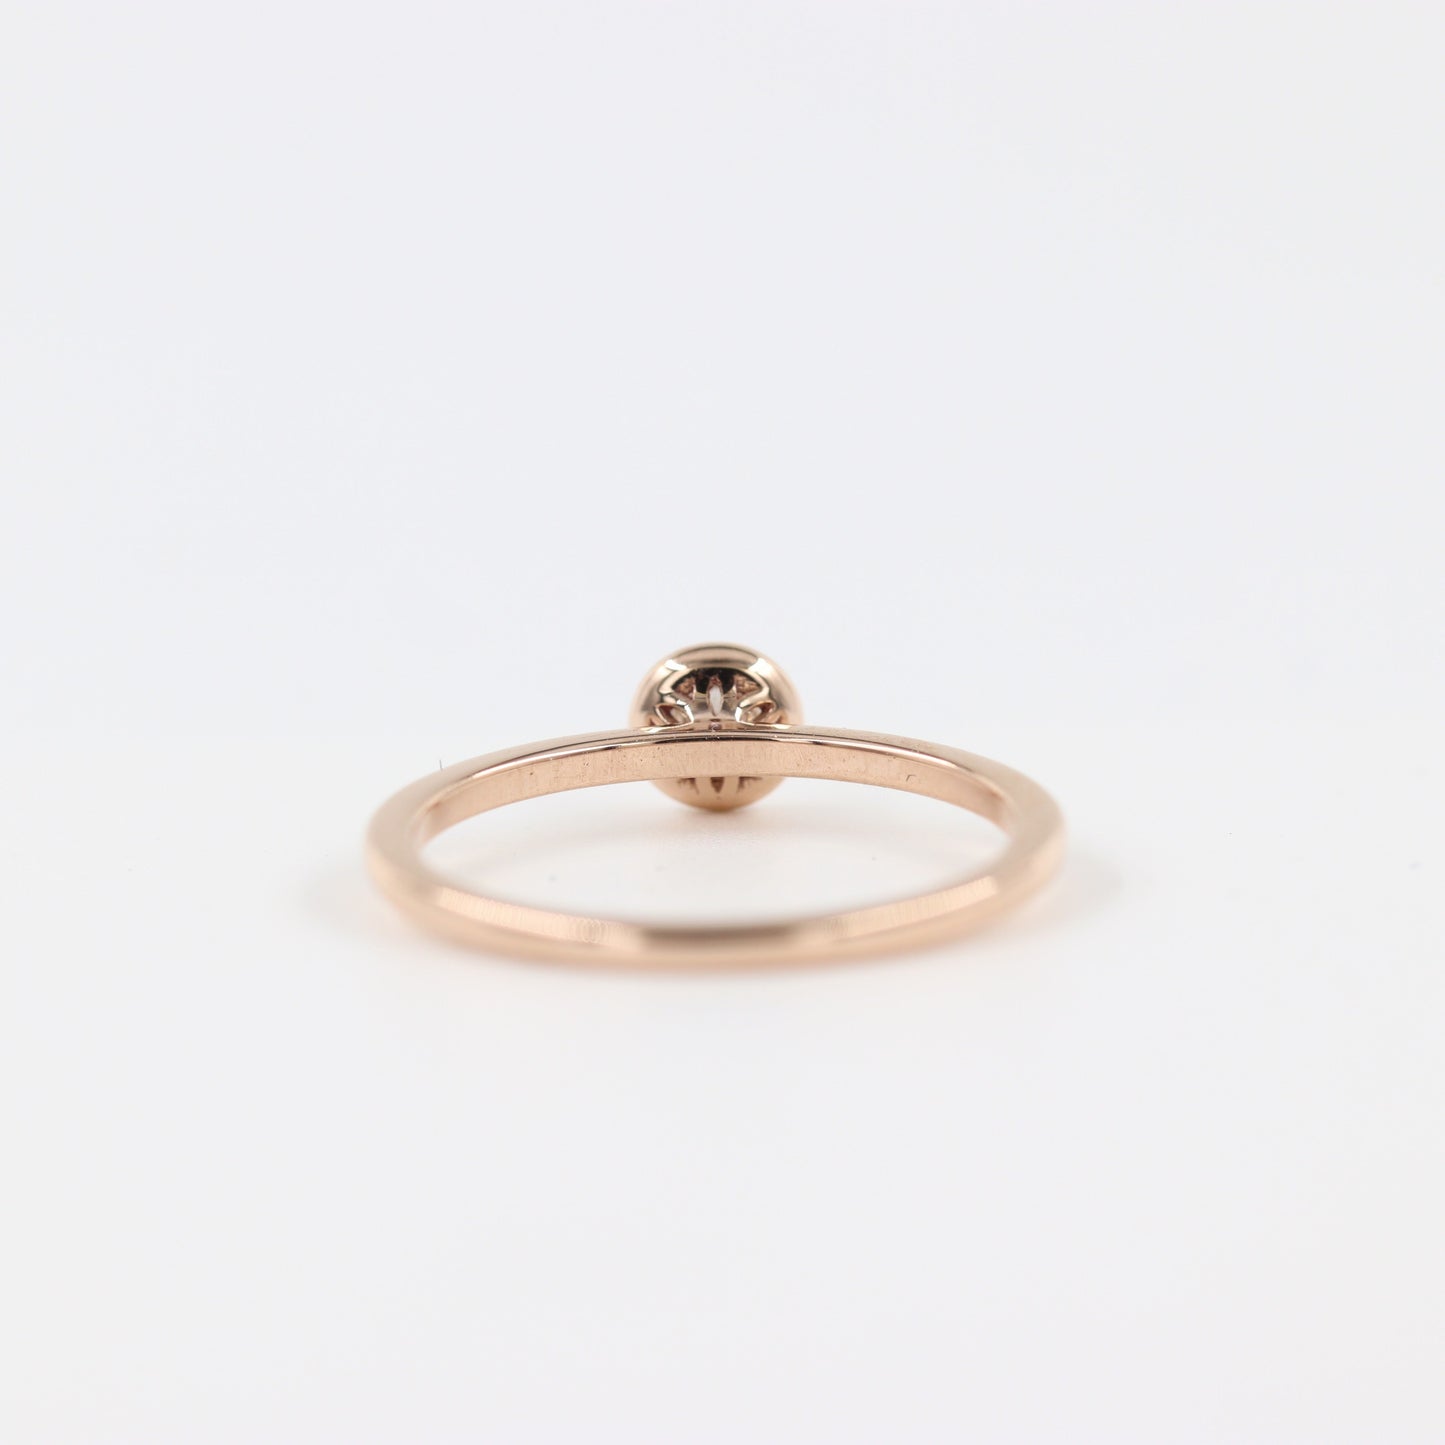 0.2ct Diamond Bezel Ring/Simple Diamond Engagement Ring/Single Natural Diamond Ring/14K gold Round Bezel Dainty Ring/anniversary Gift